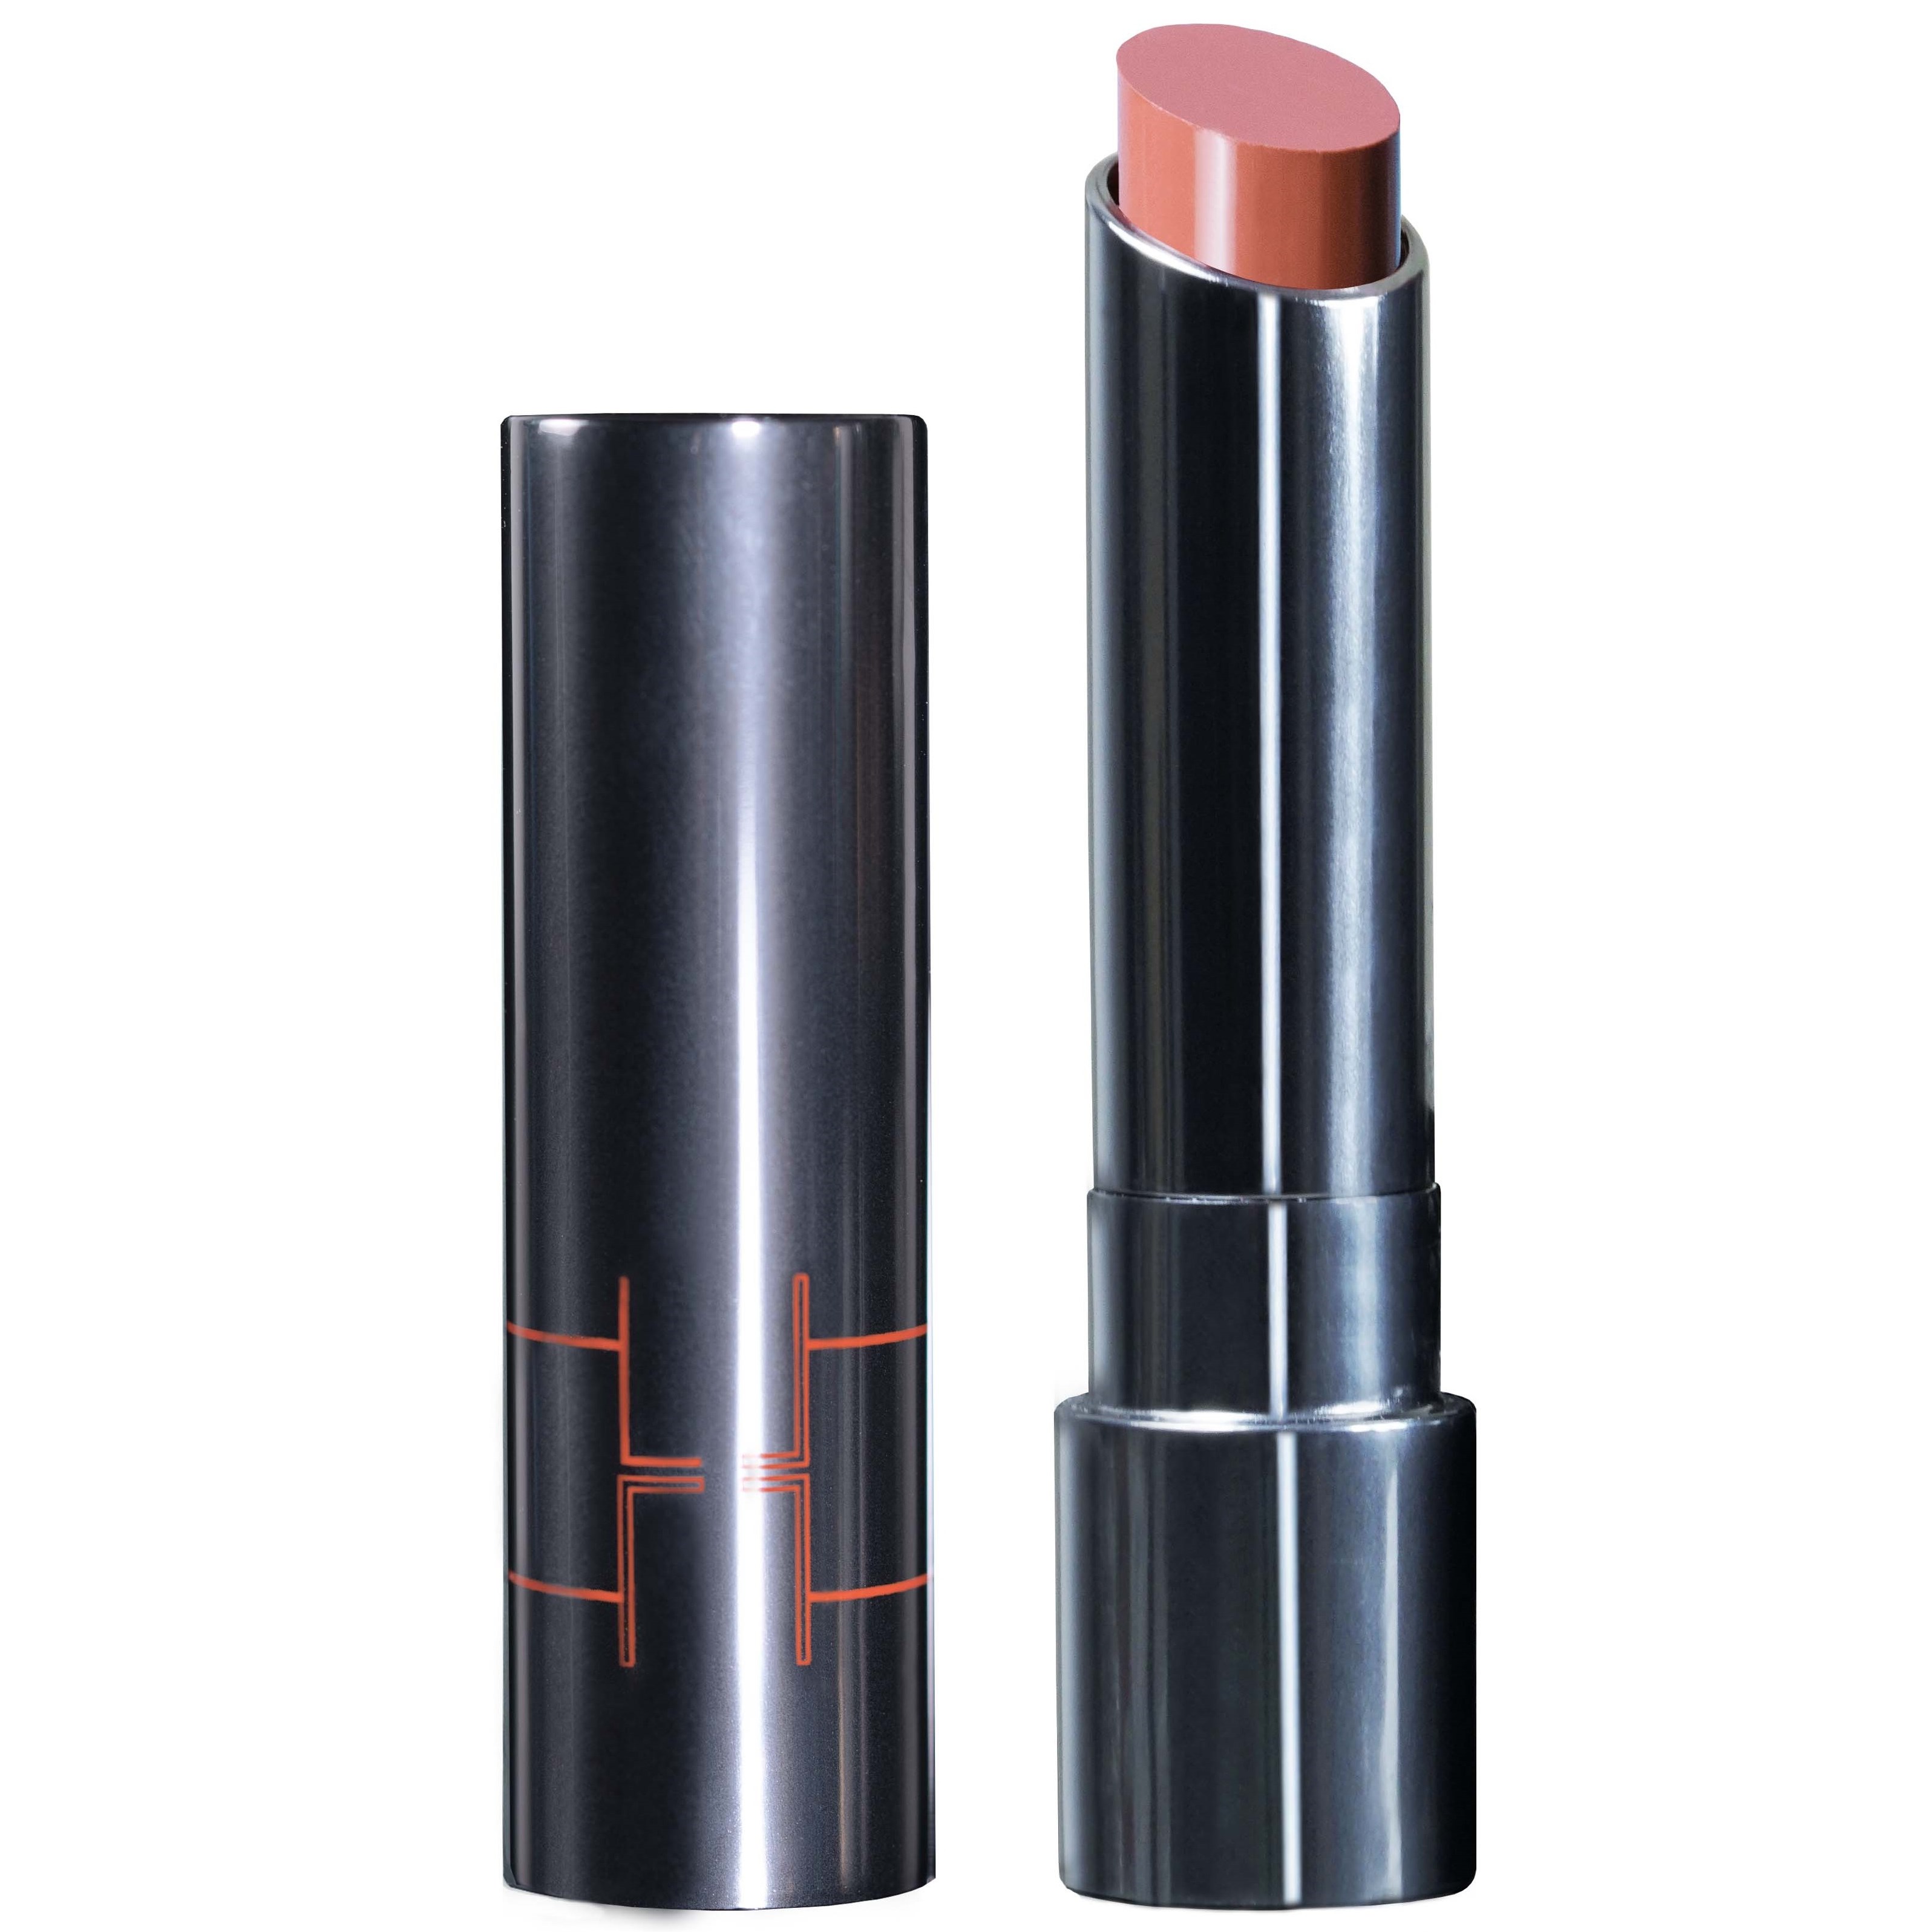 LH cosmetics Fantastick Multi-use Lipstick SPF15 Famous